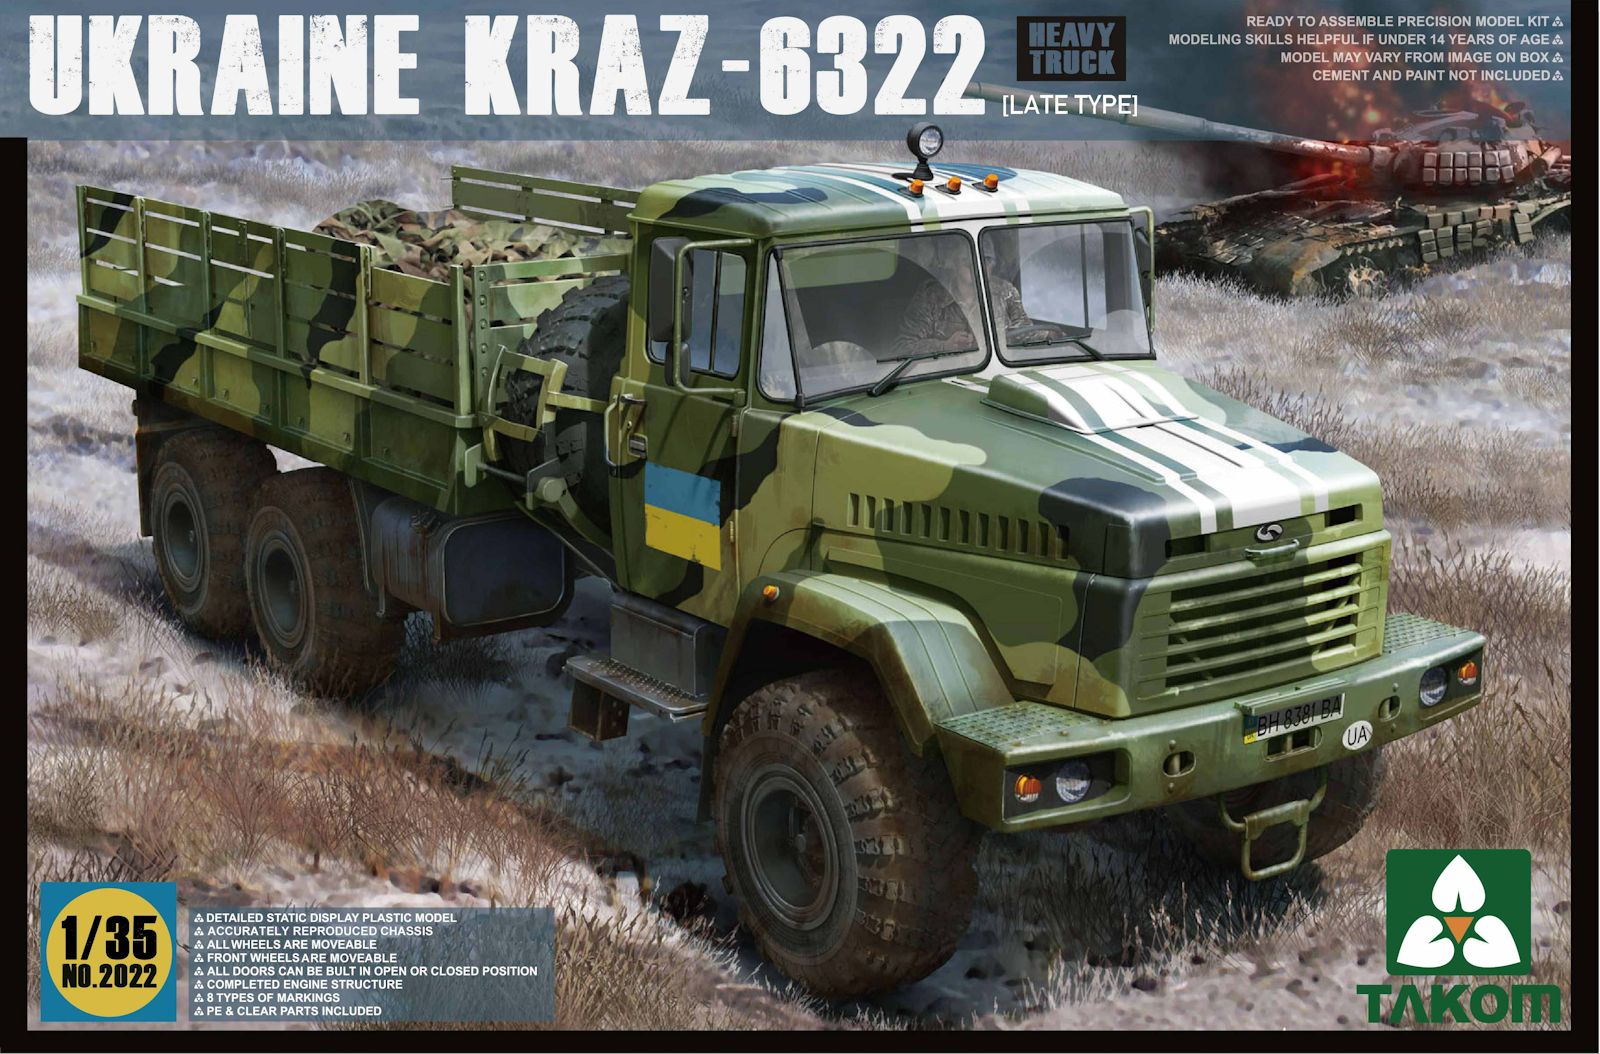 Ukraine KrAZ-6322 Heavy Truck (late type)